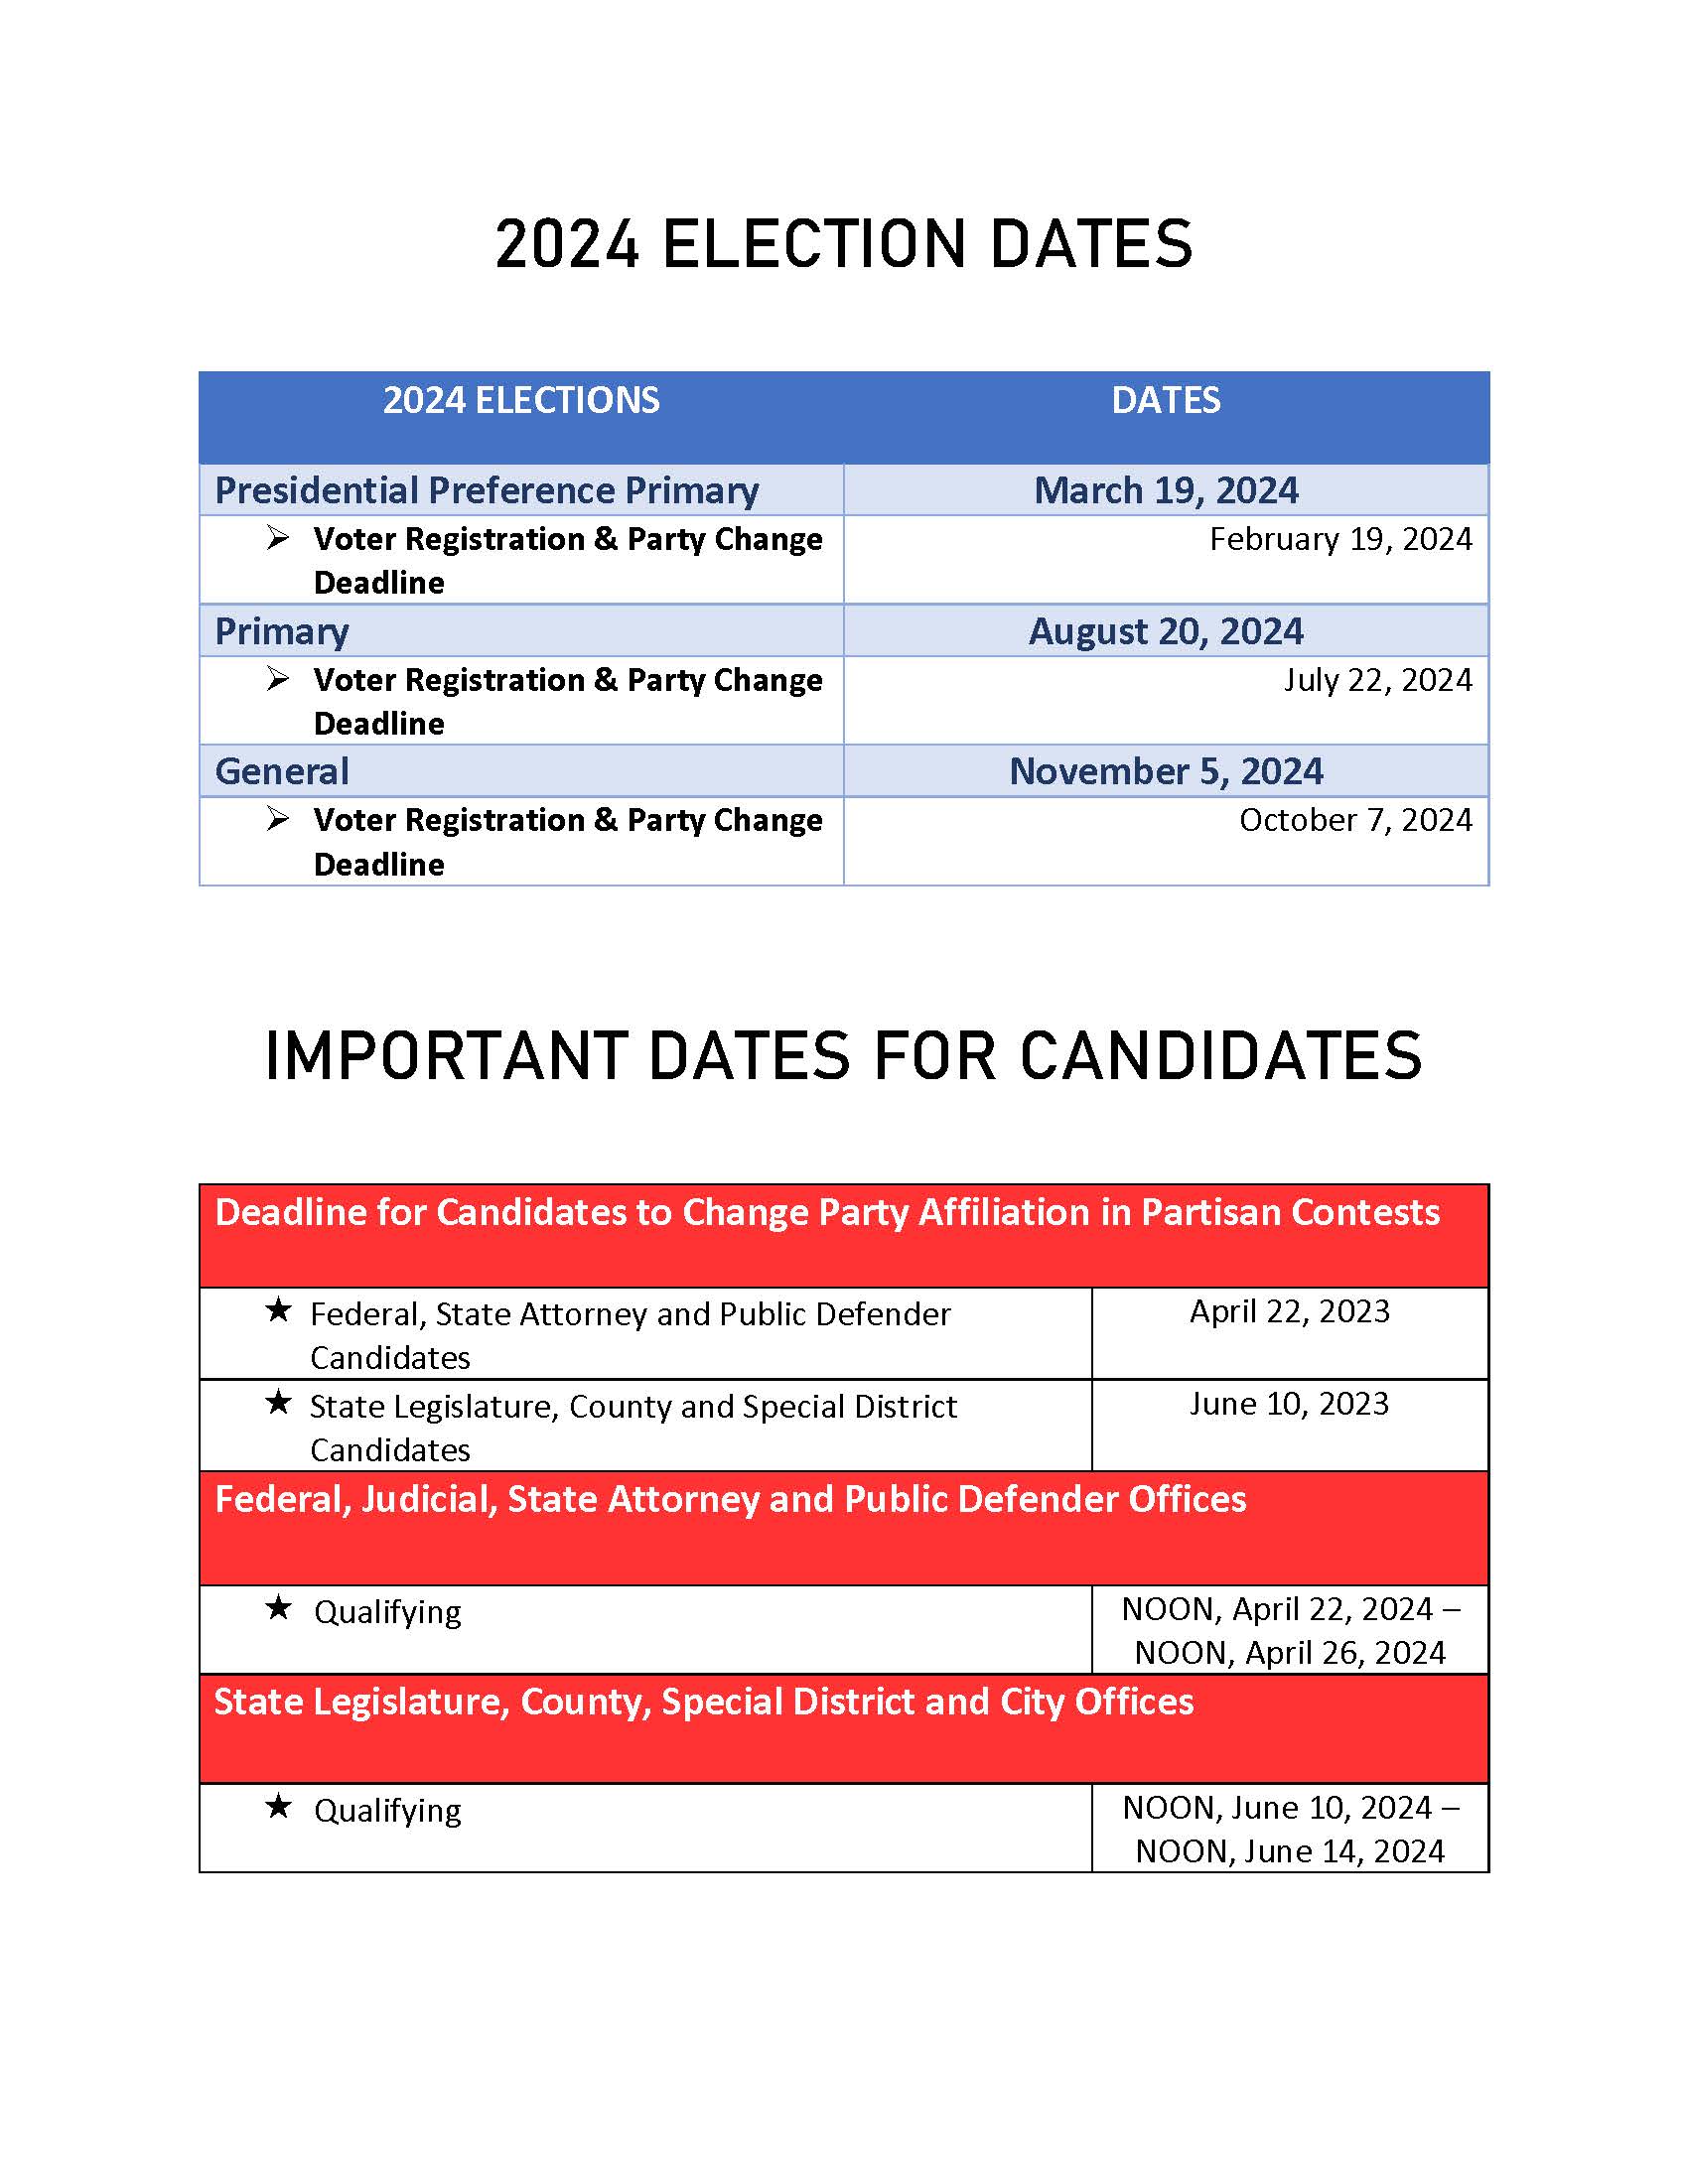 2024 ELECTION DATES & CANDIDATES DEADLINES